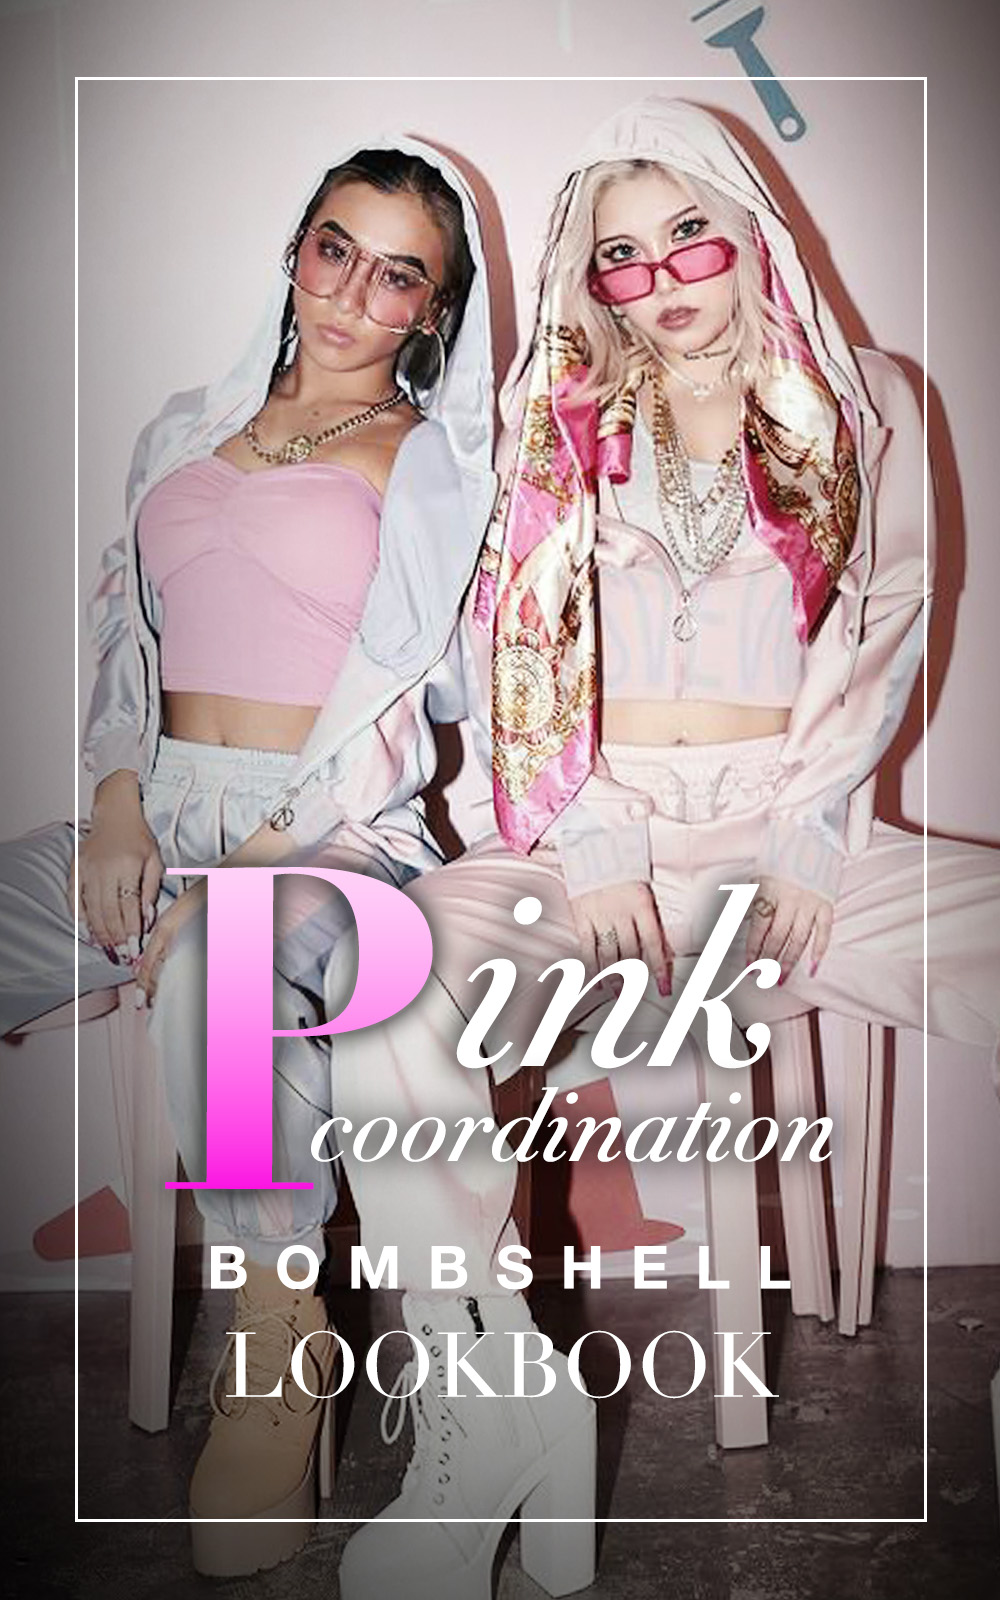 Bombshell Pink coordination lookbook